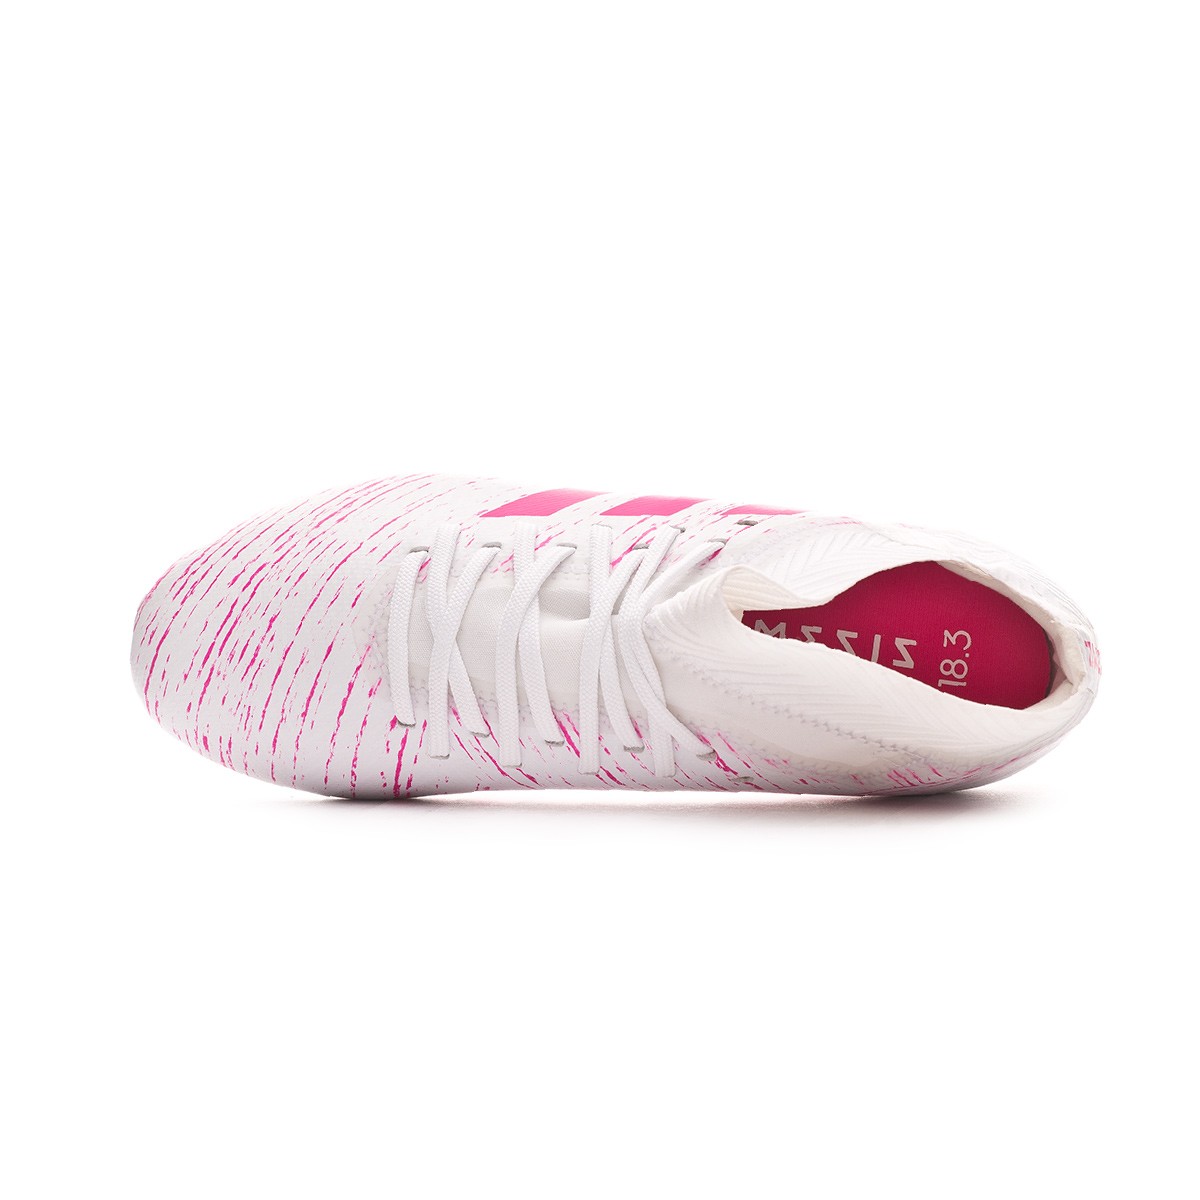 adidas nemeziz 18.3 pink